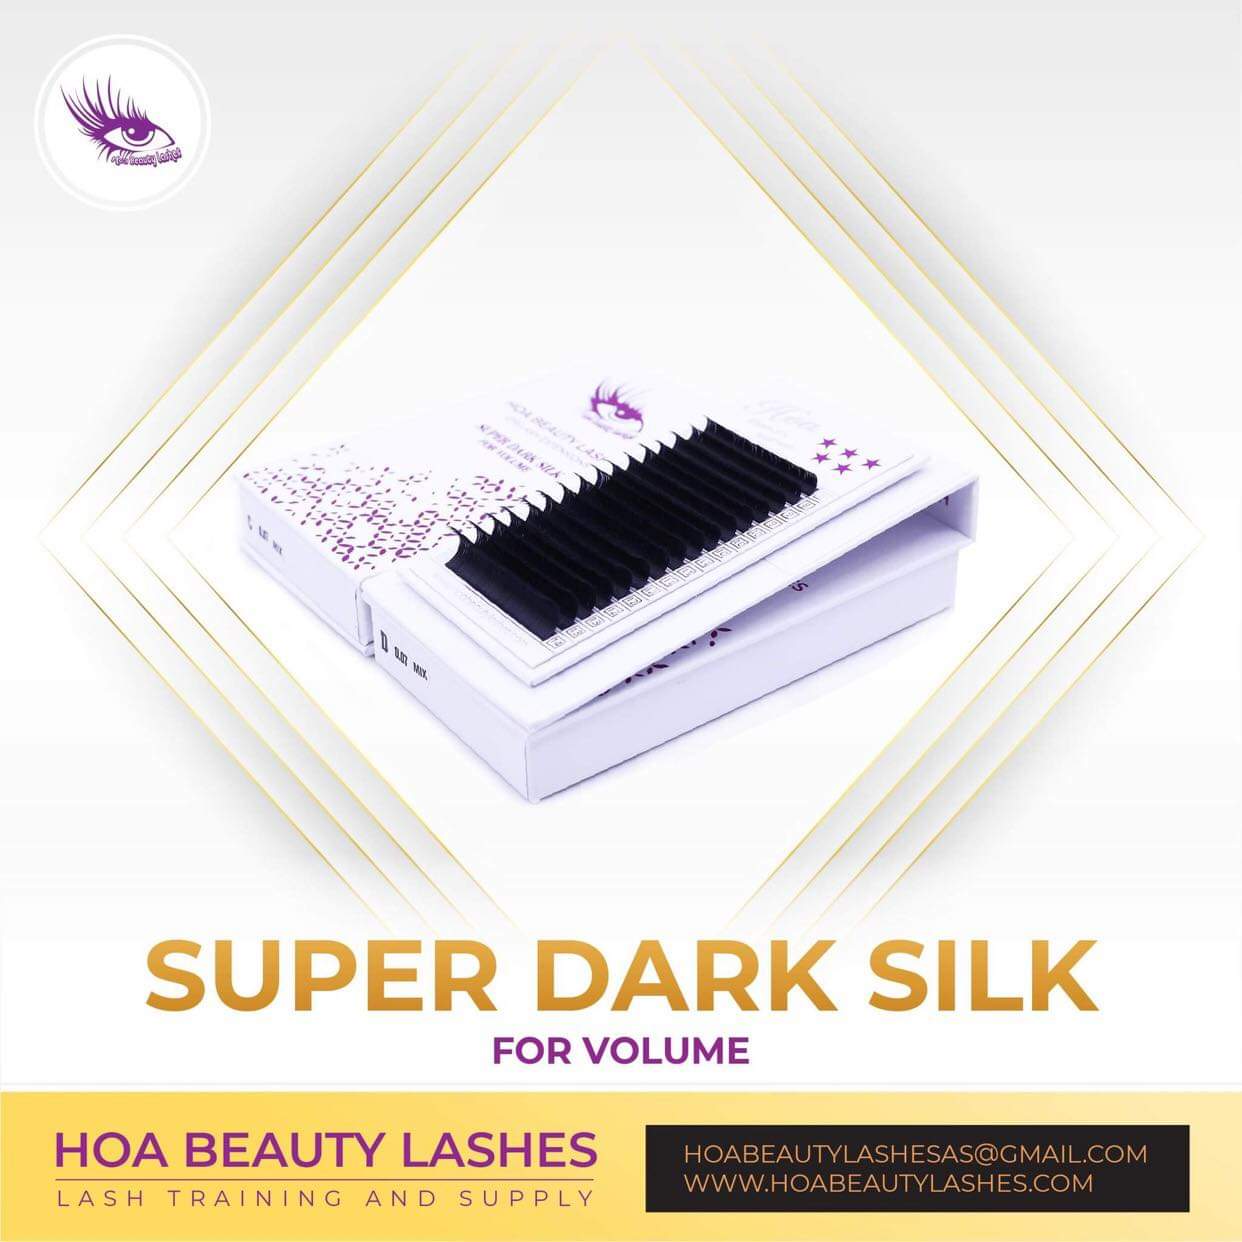 Hoabeautylashes - Super Dark Silk